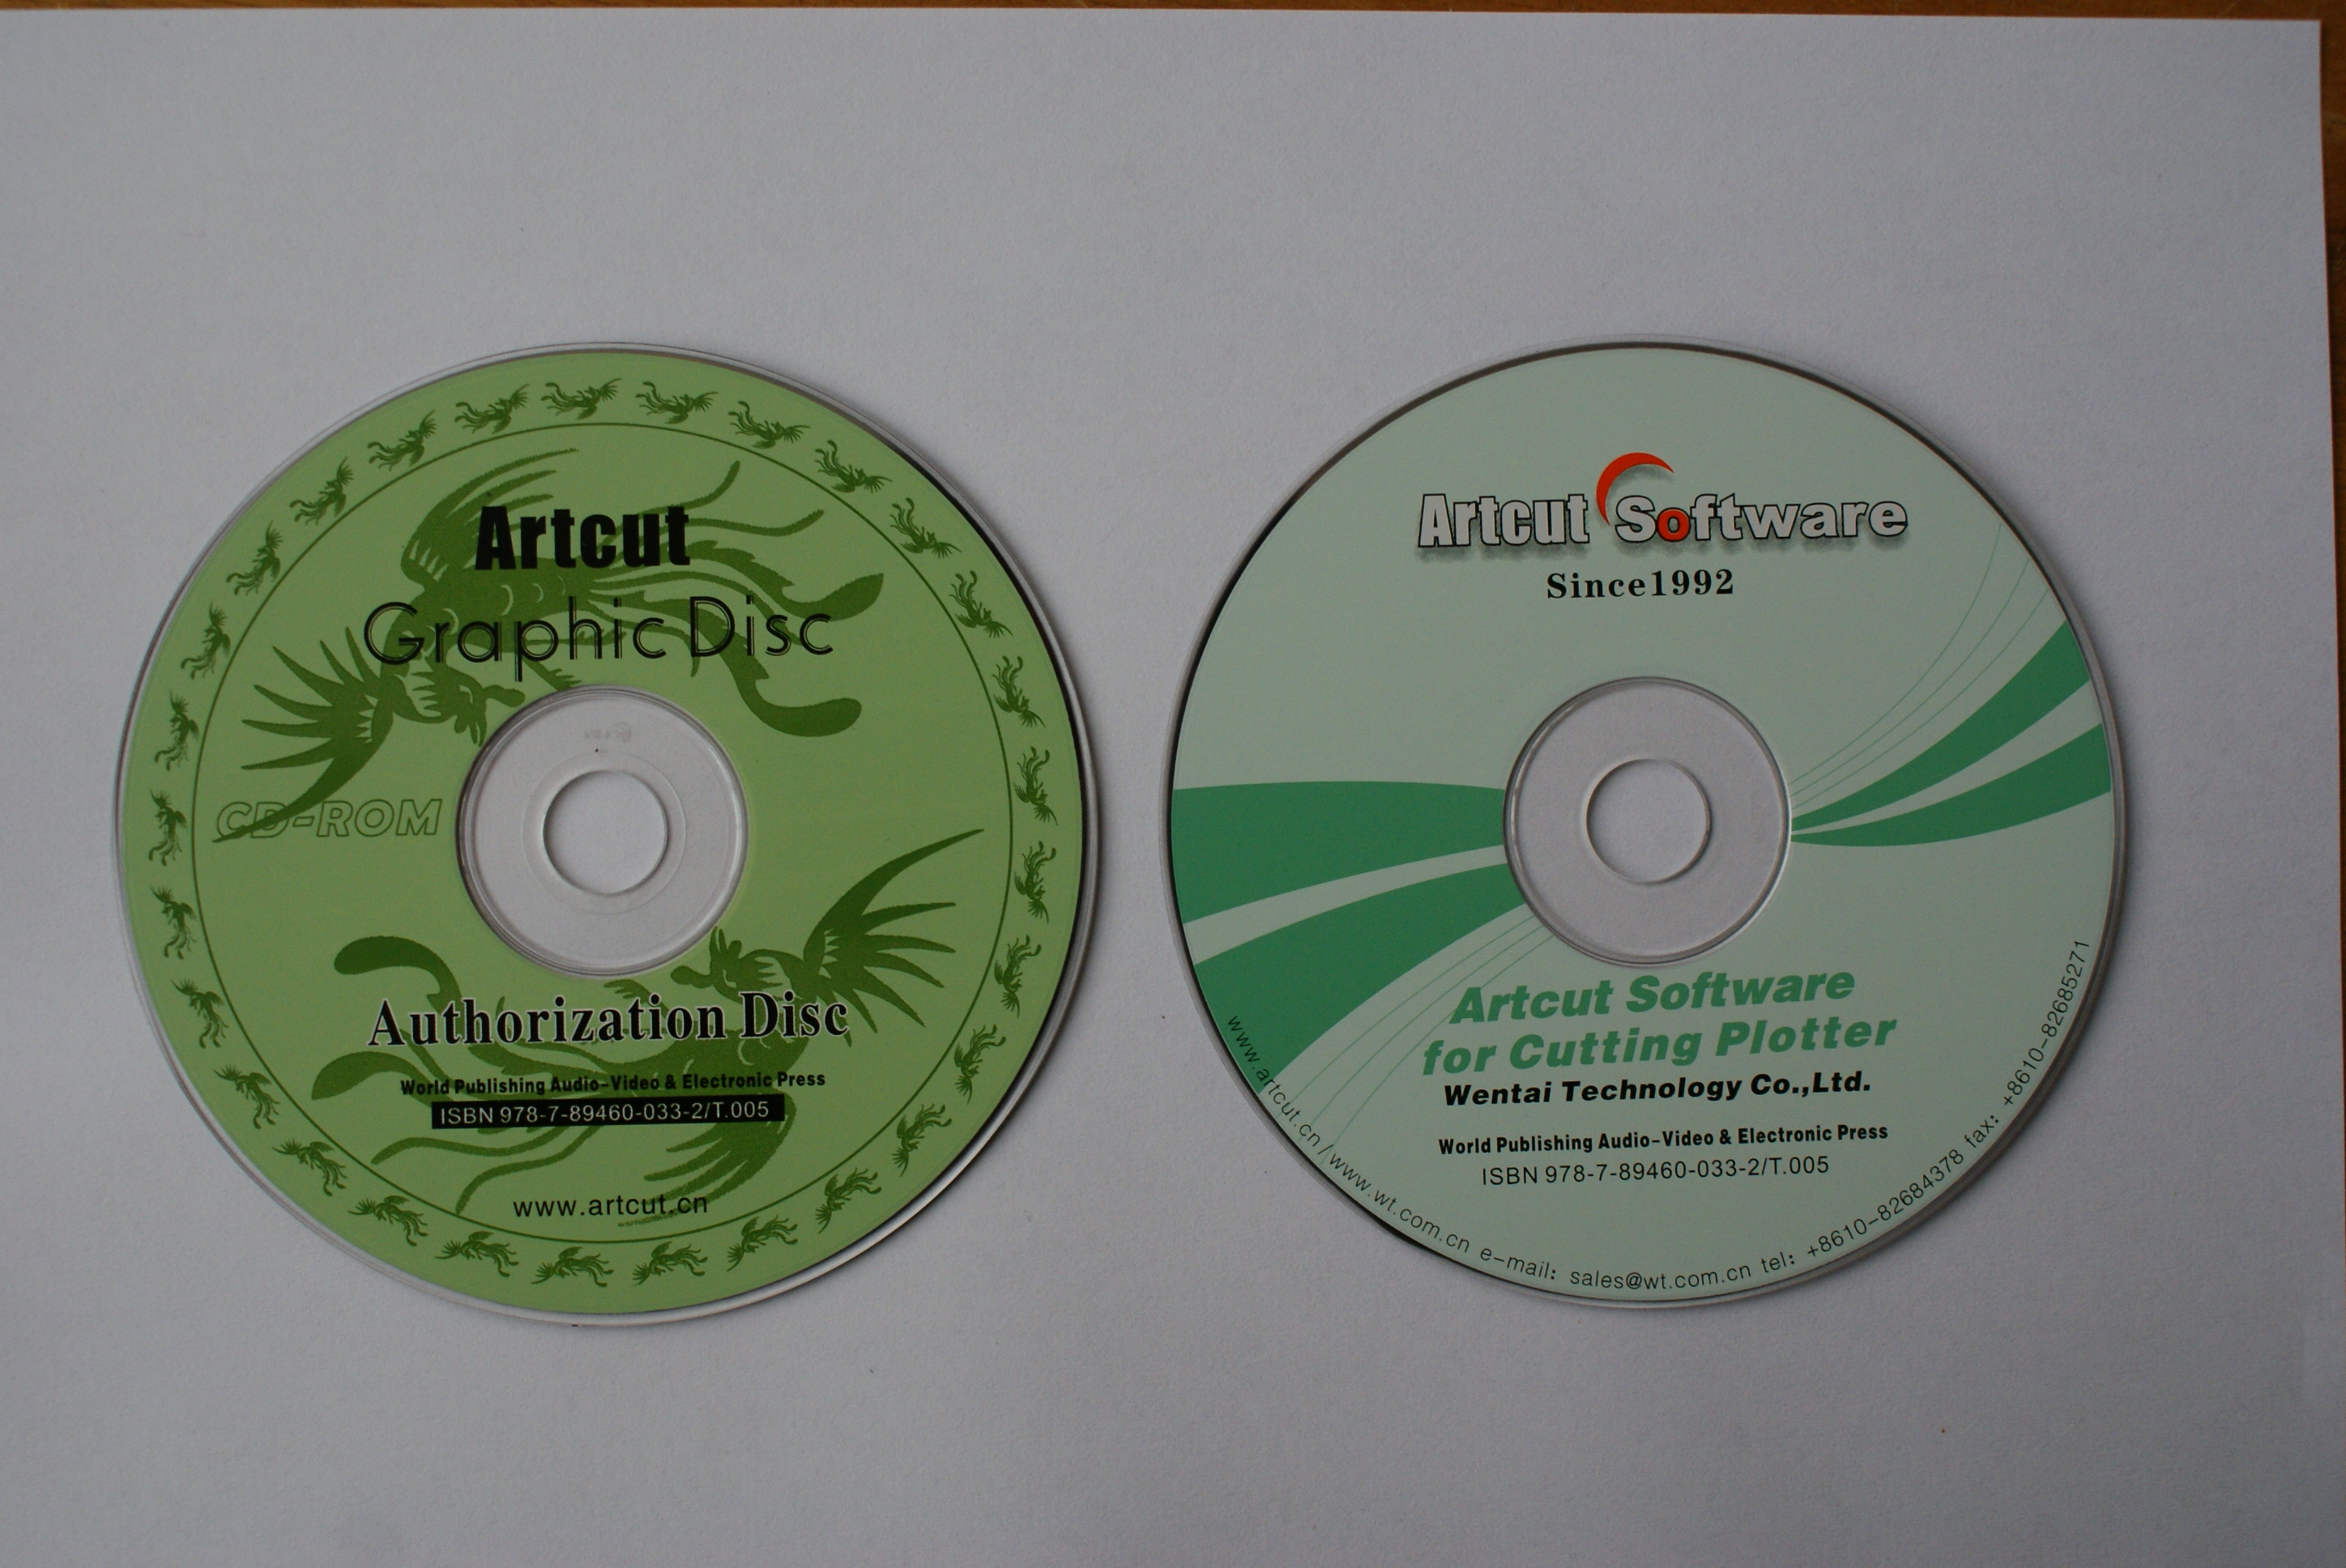 artcut graphic disc